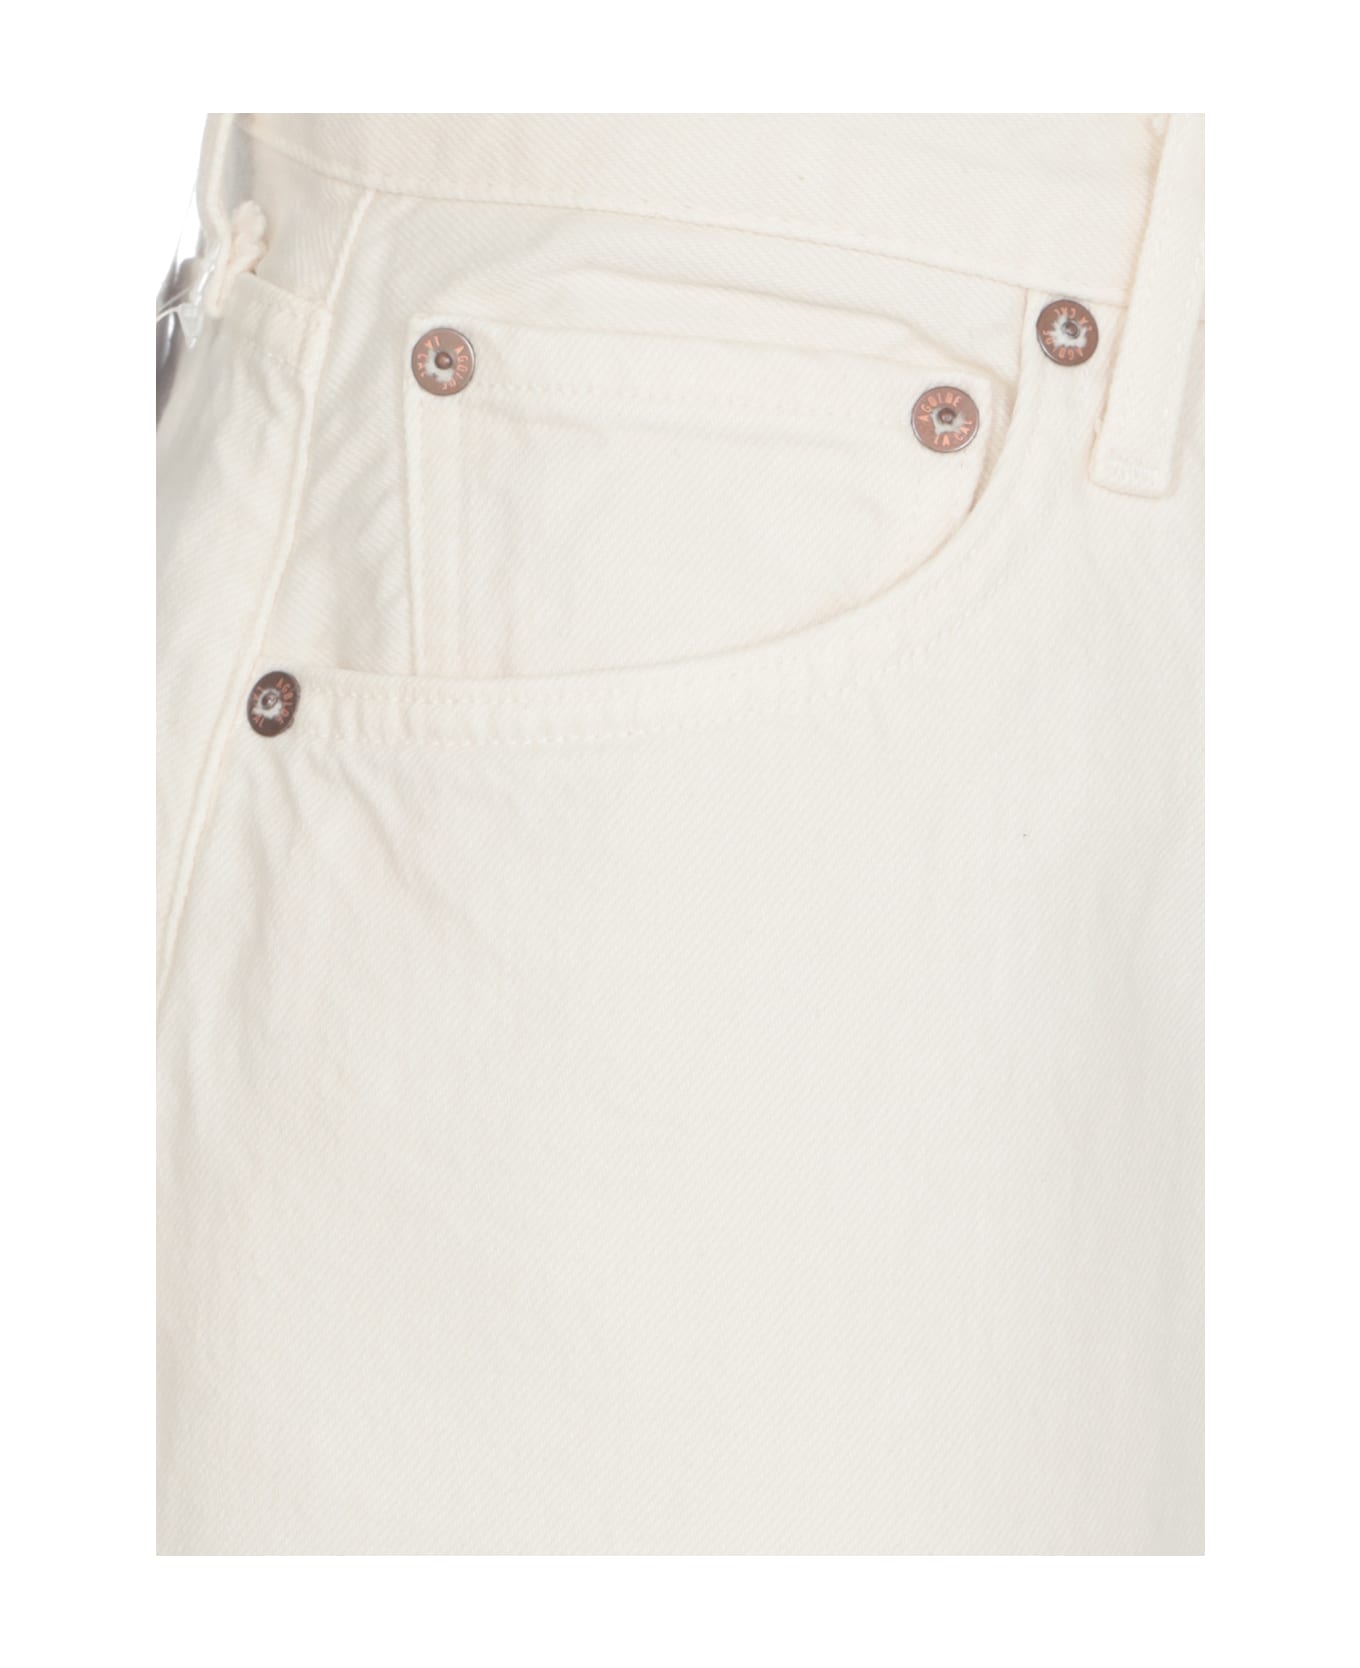 AGOLDE Dame Shorts - White